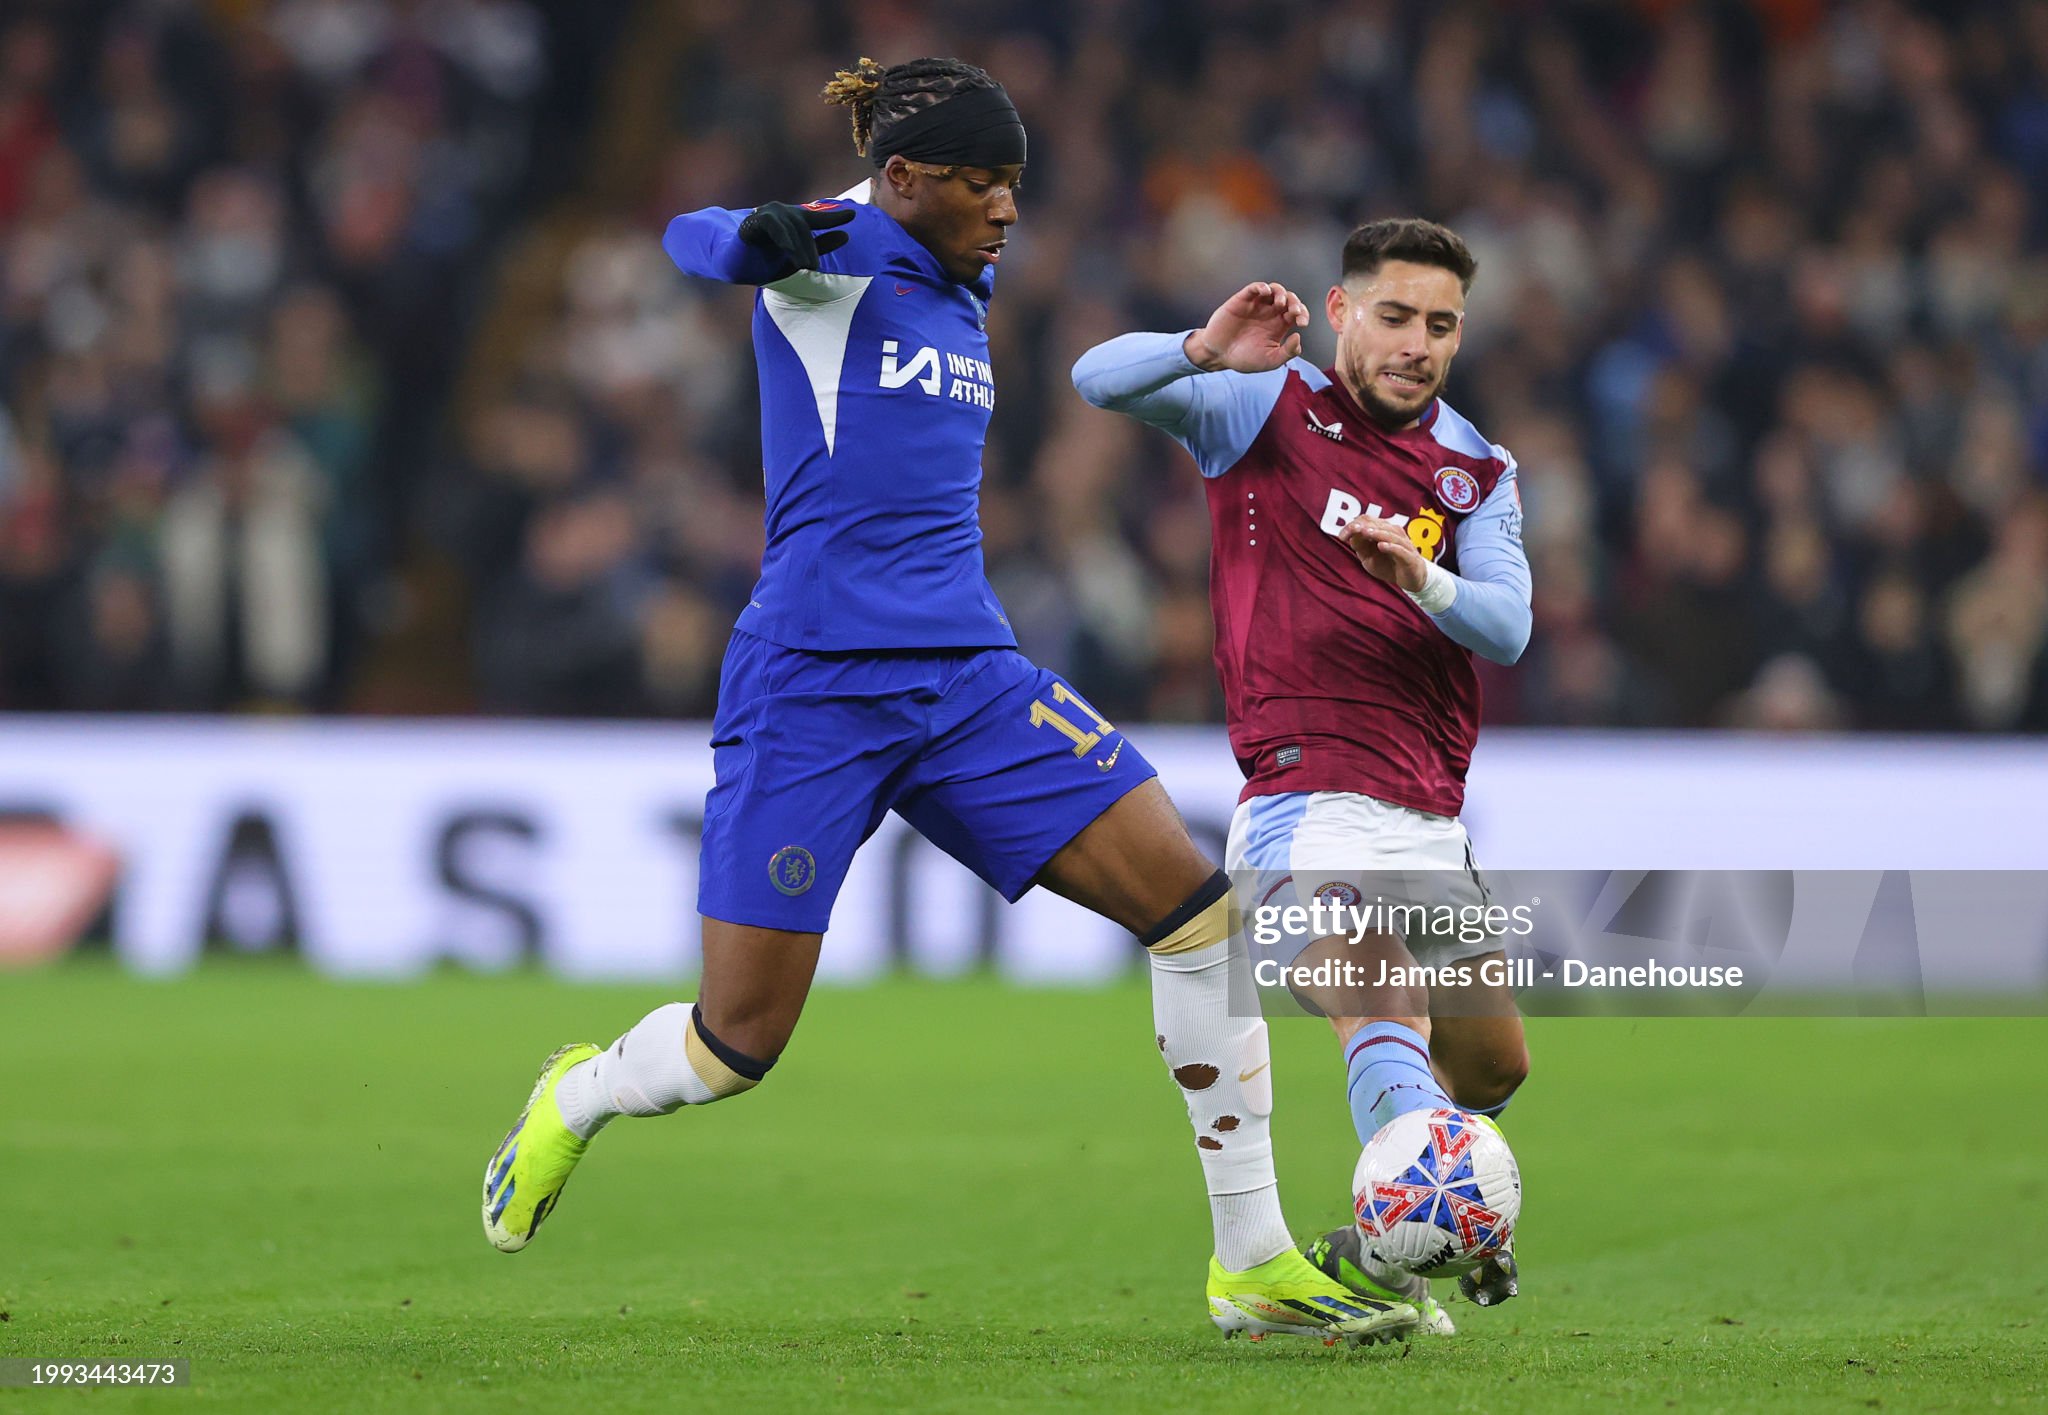 Madueke terrorized the Aston Villa defense all evening